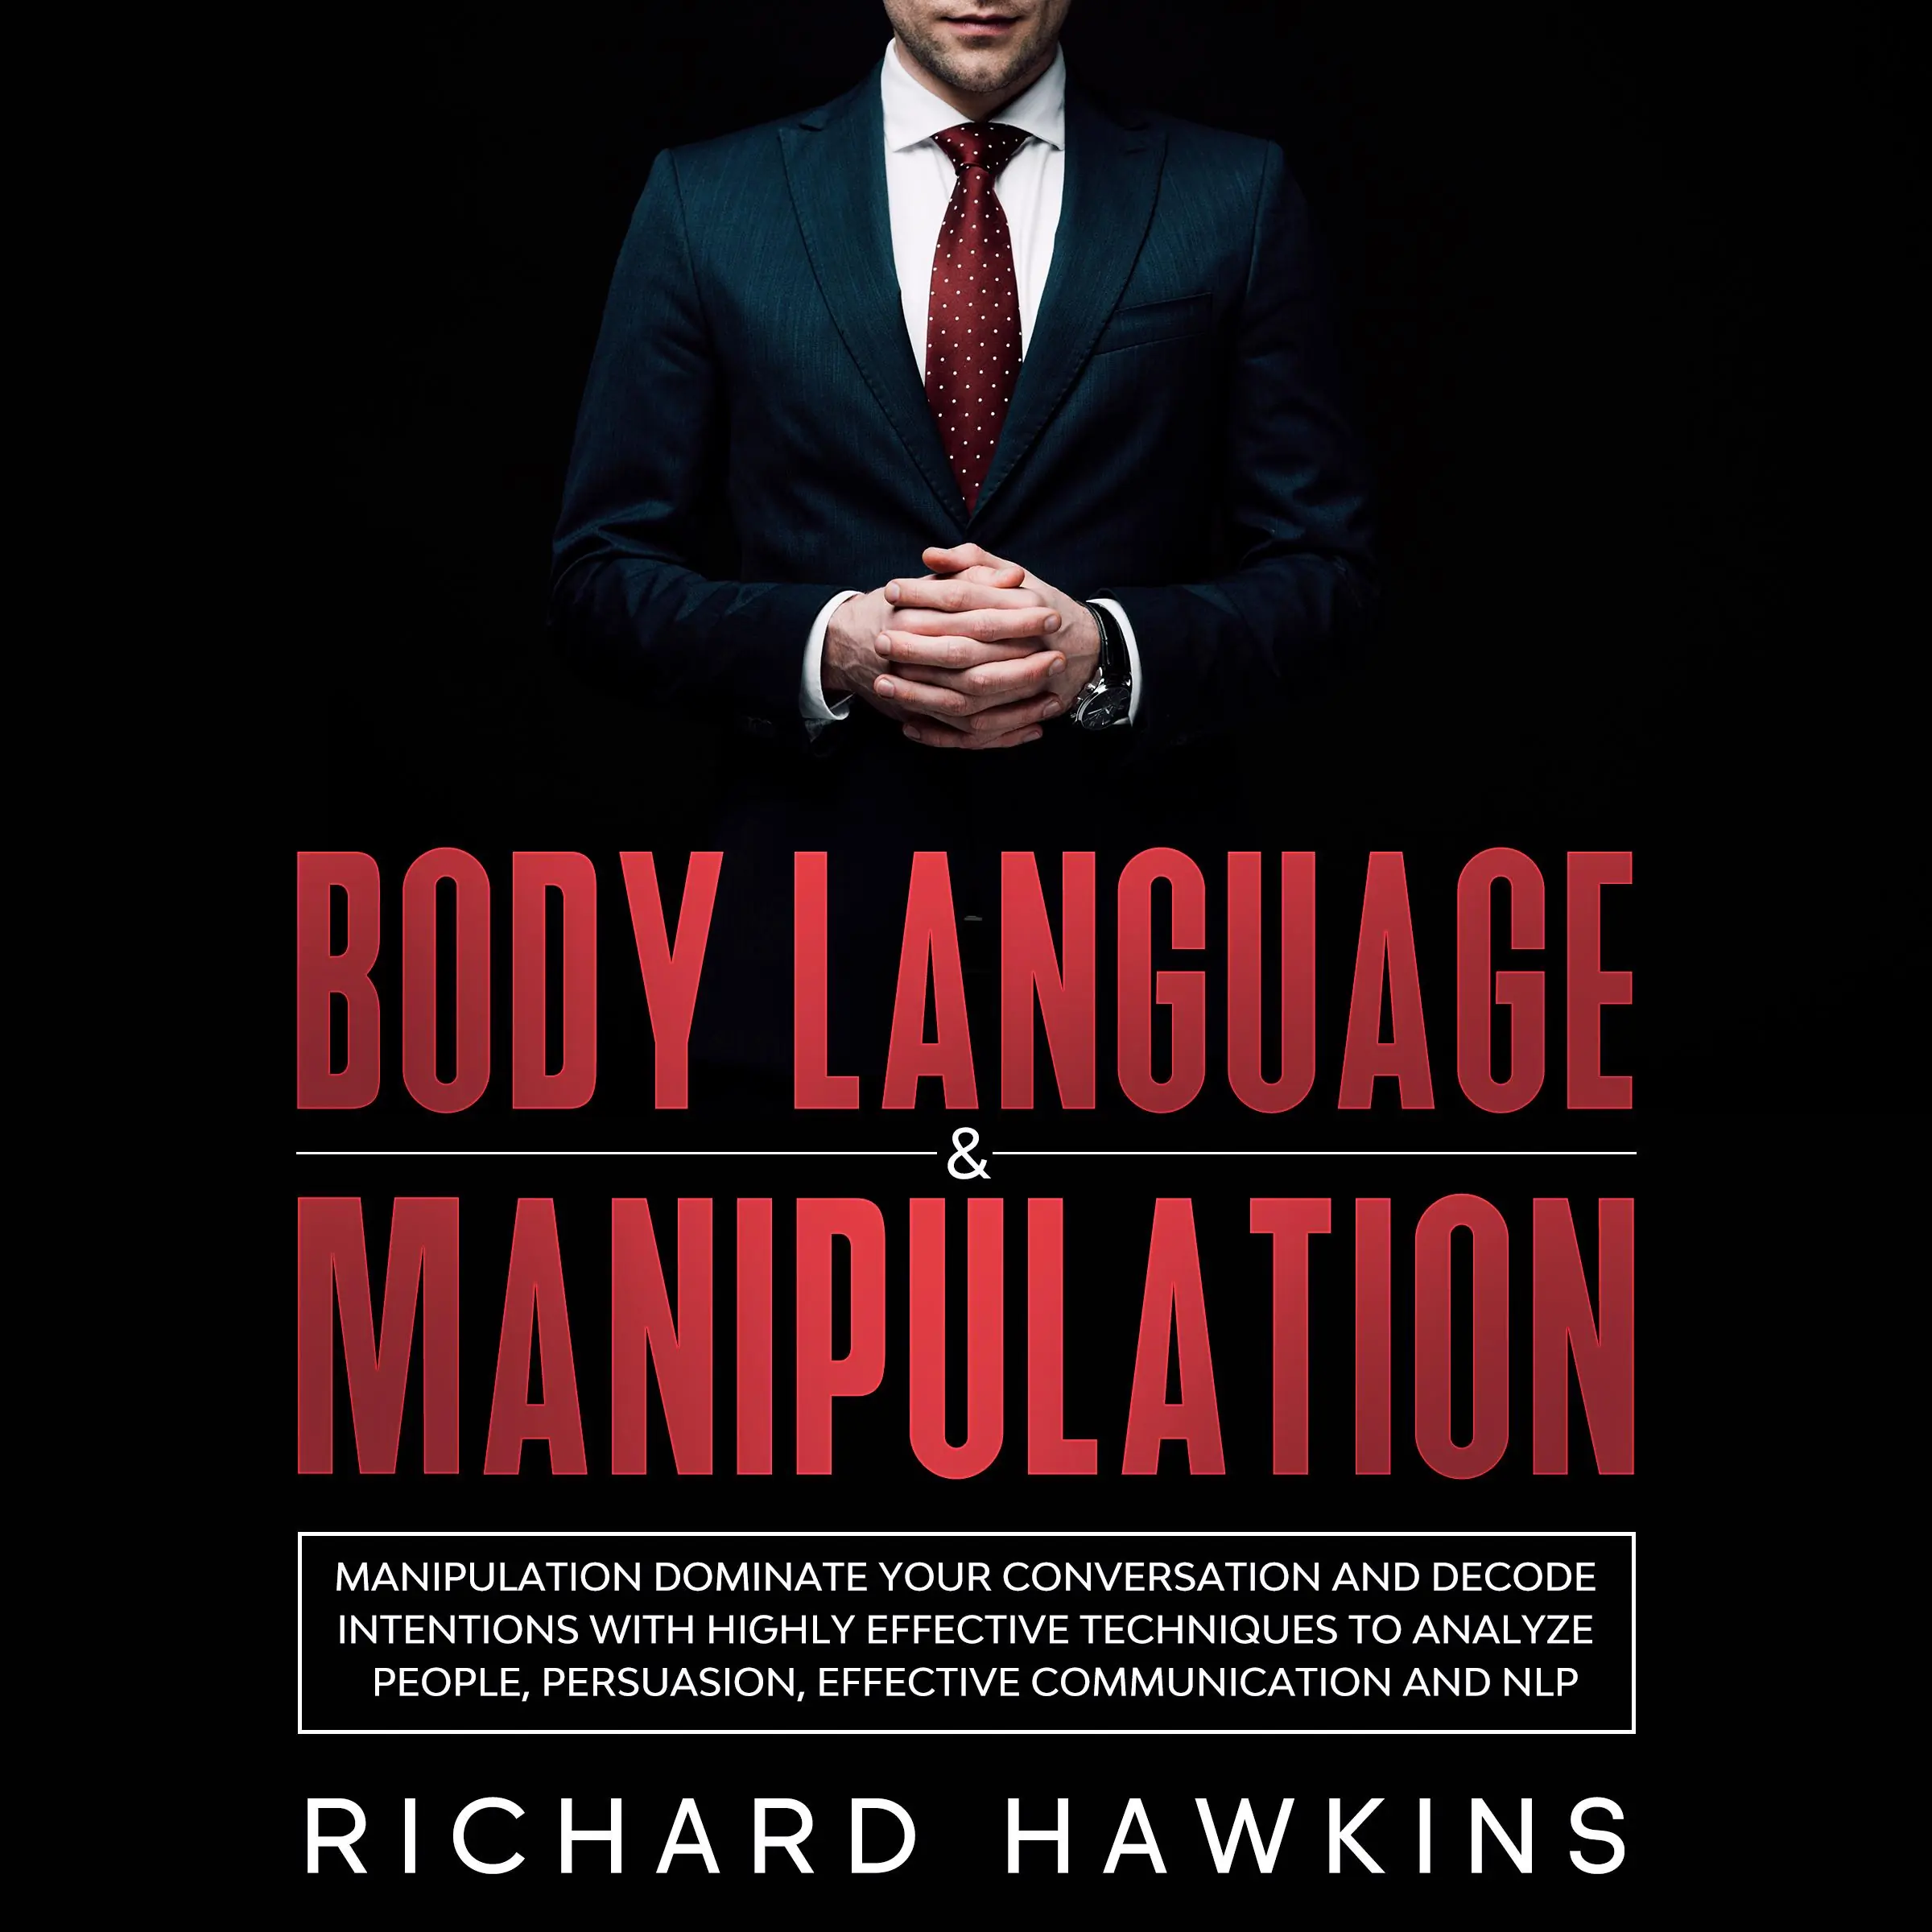 Body Language & Manipulation Audiobook by Richard Hawkins